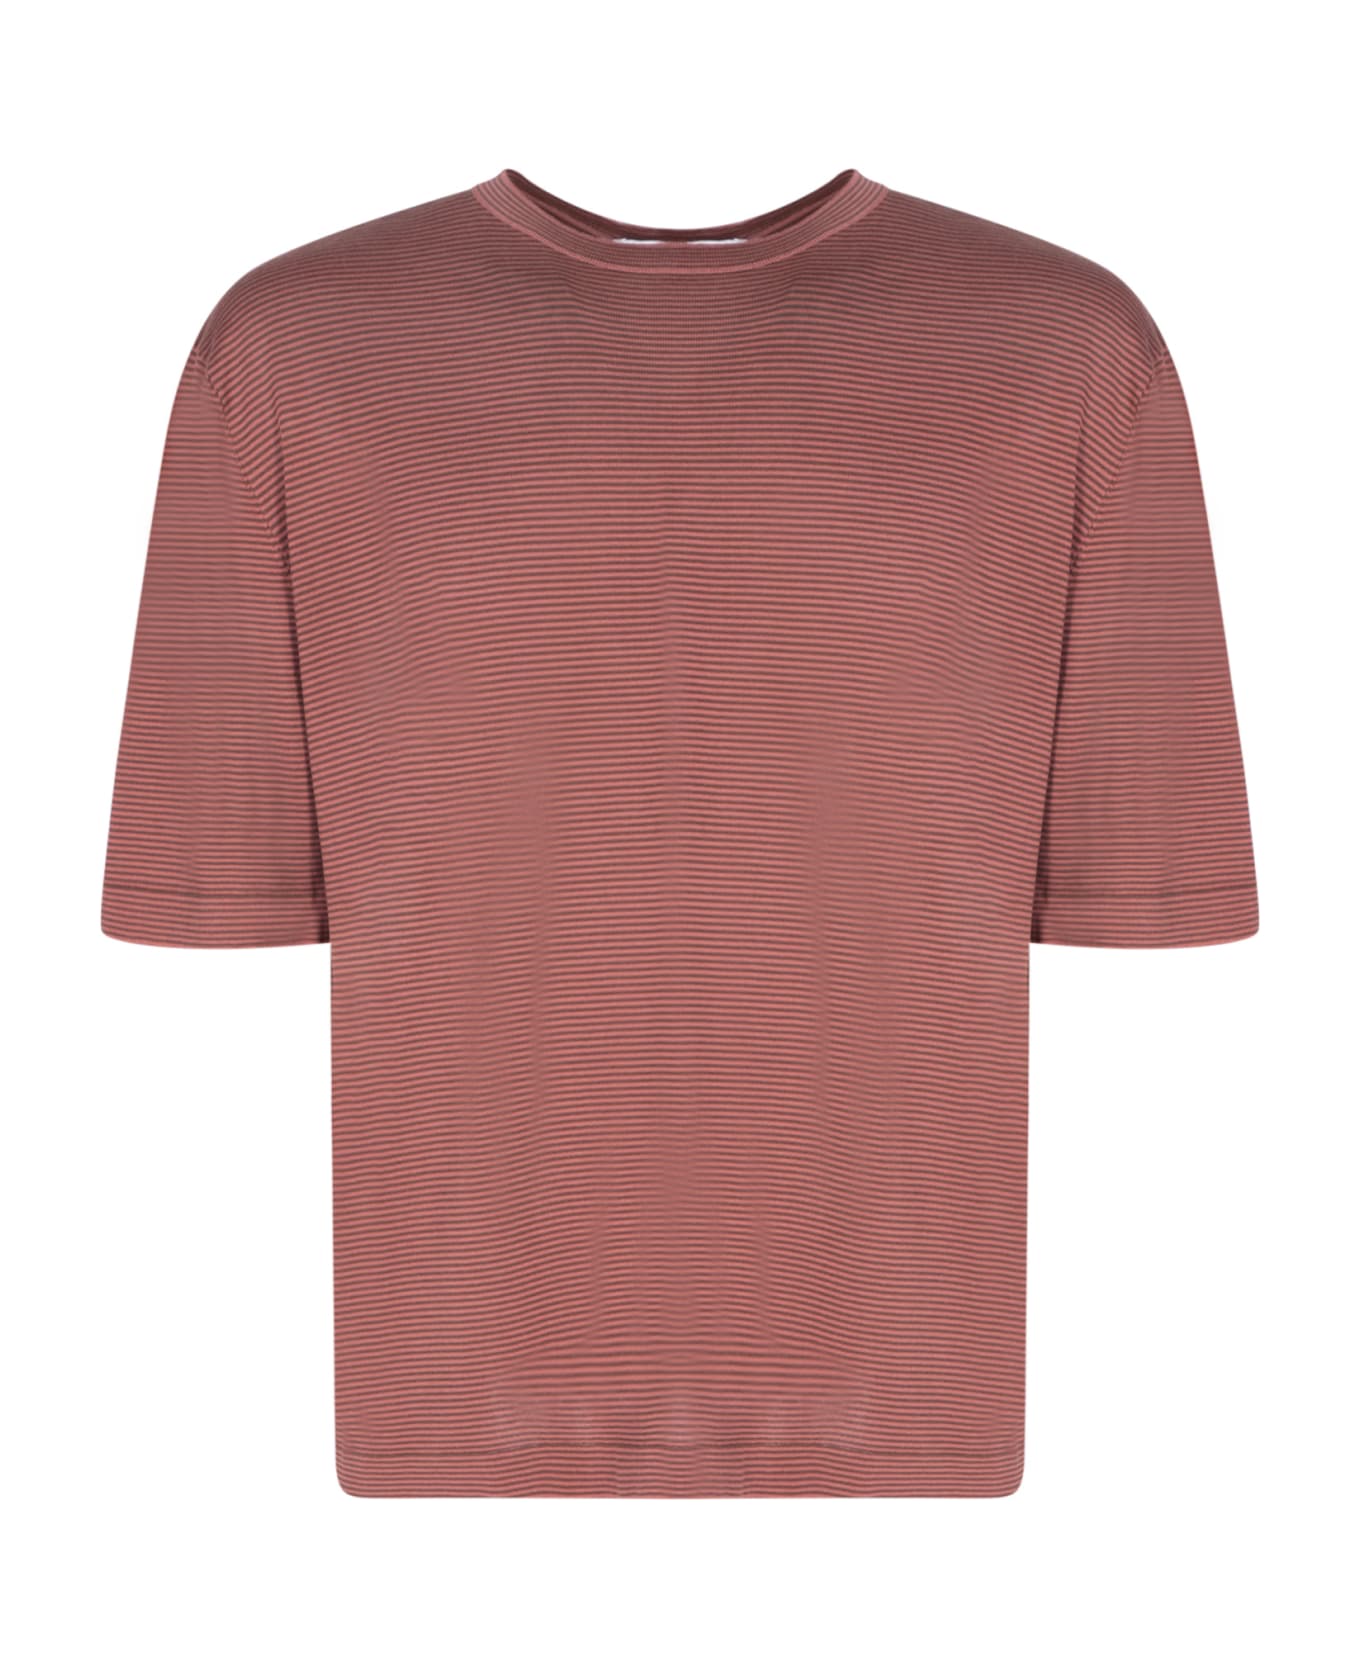 Lardini Jersey Striped Red/brown T-shirt - Brown